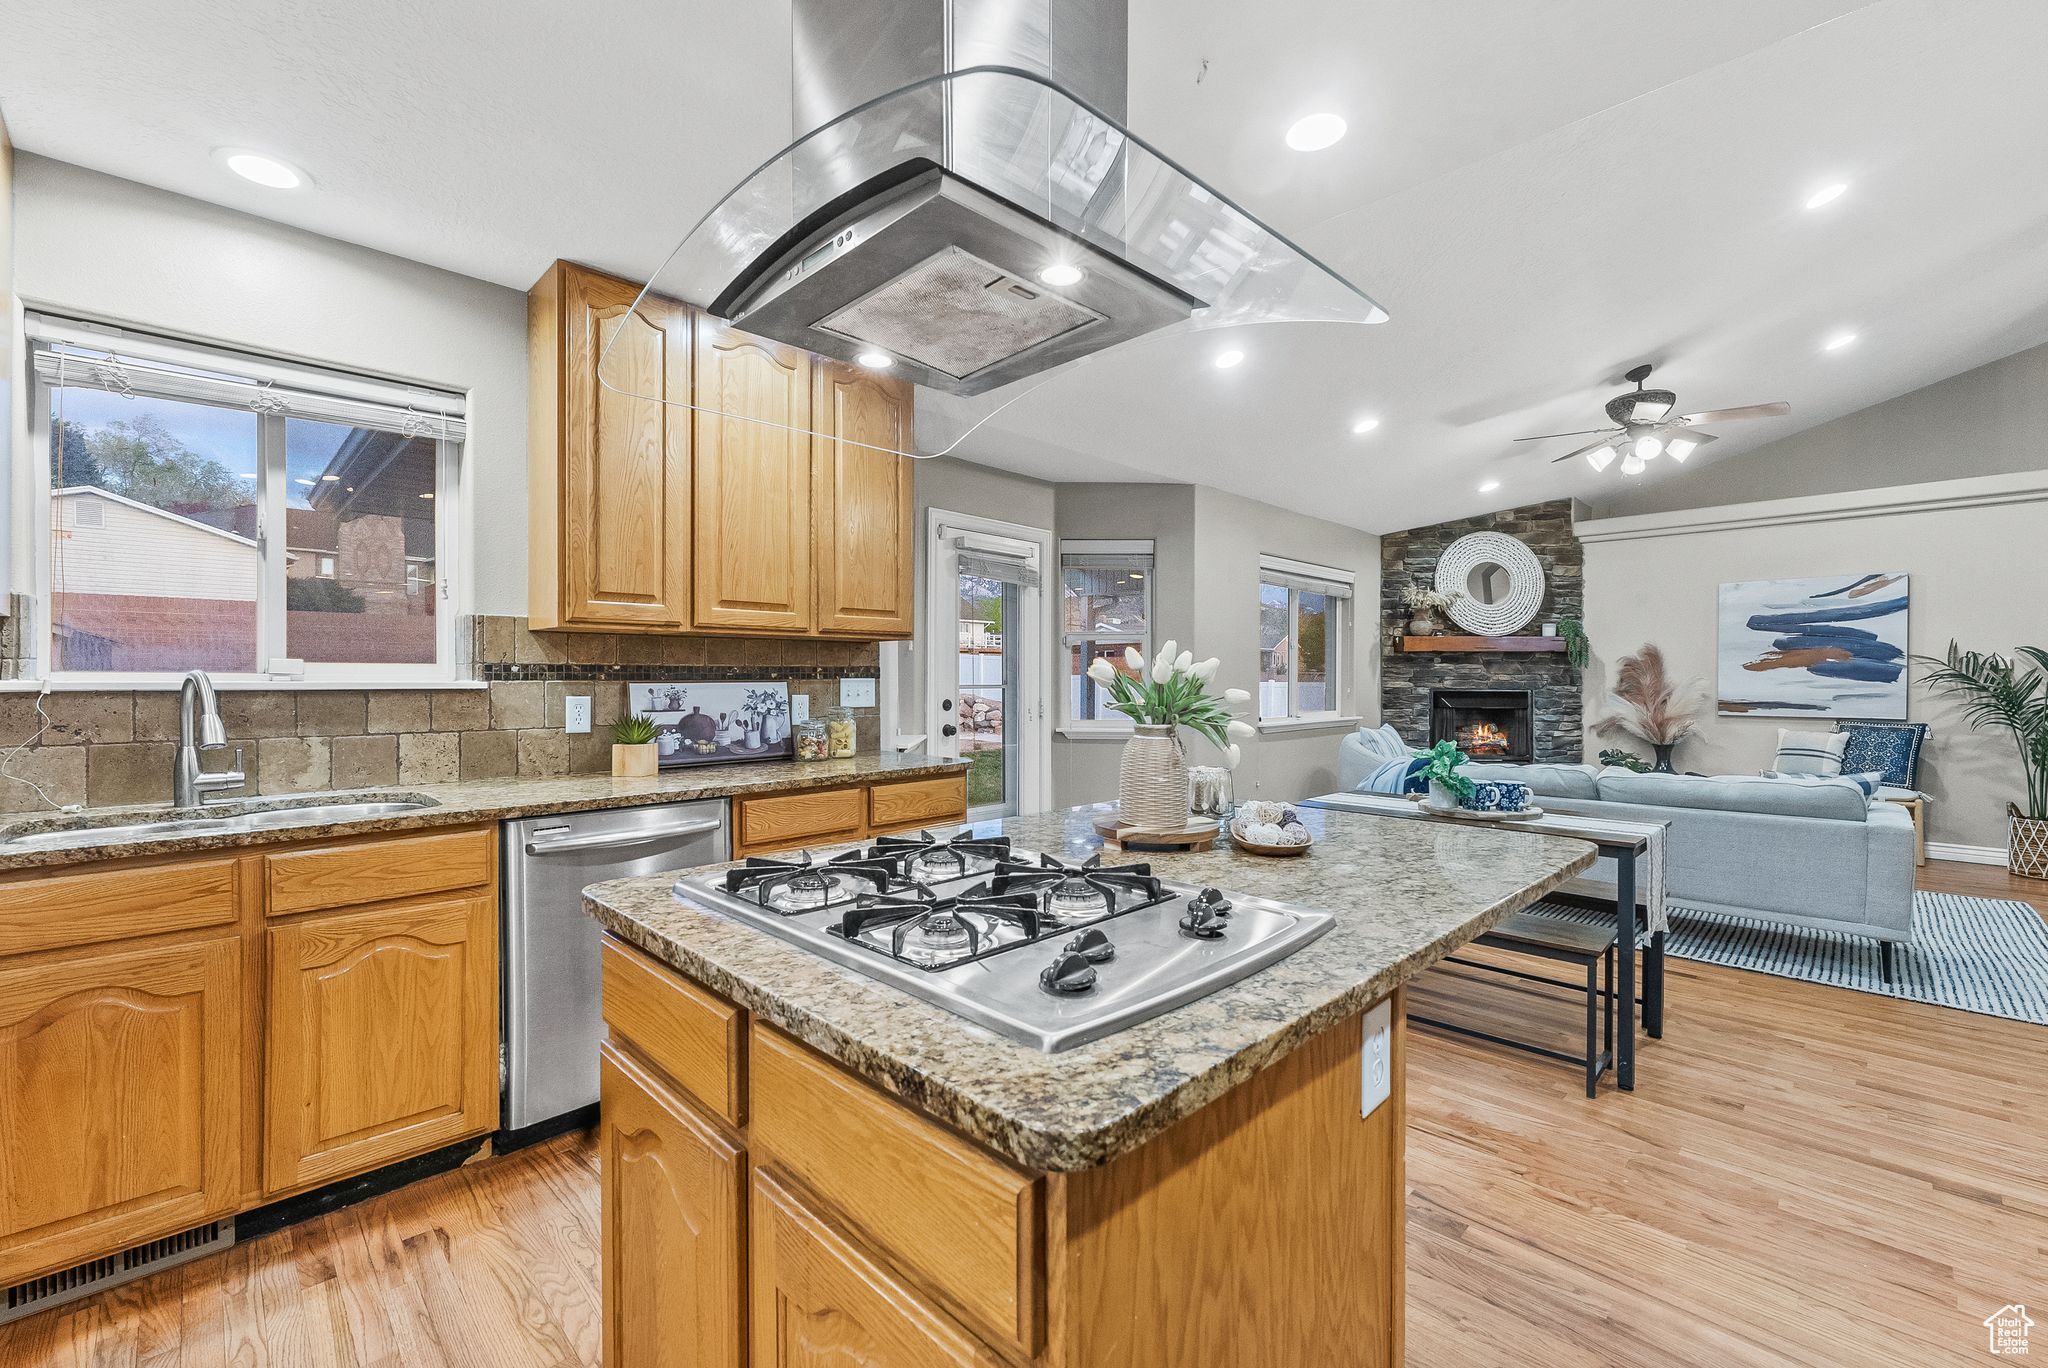 Kitchen featuring light hardwood / wood-style flooring, island range hood, backsplash, a kitchen island, and a stone fireplace